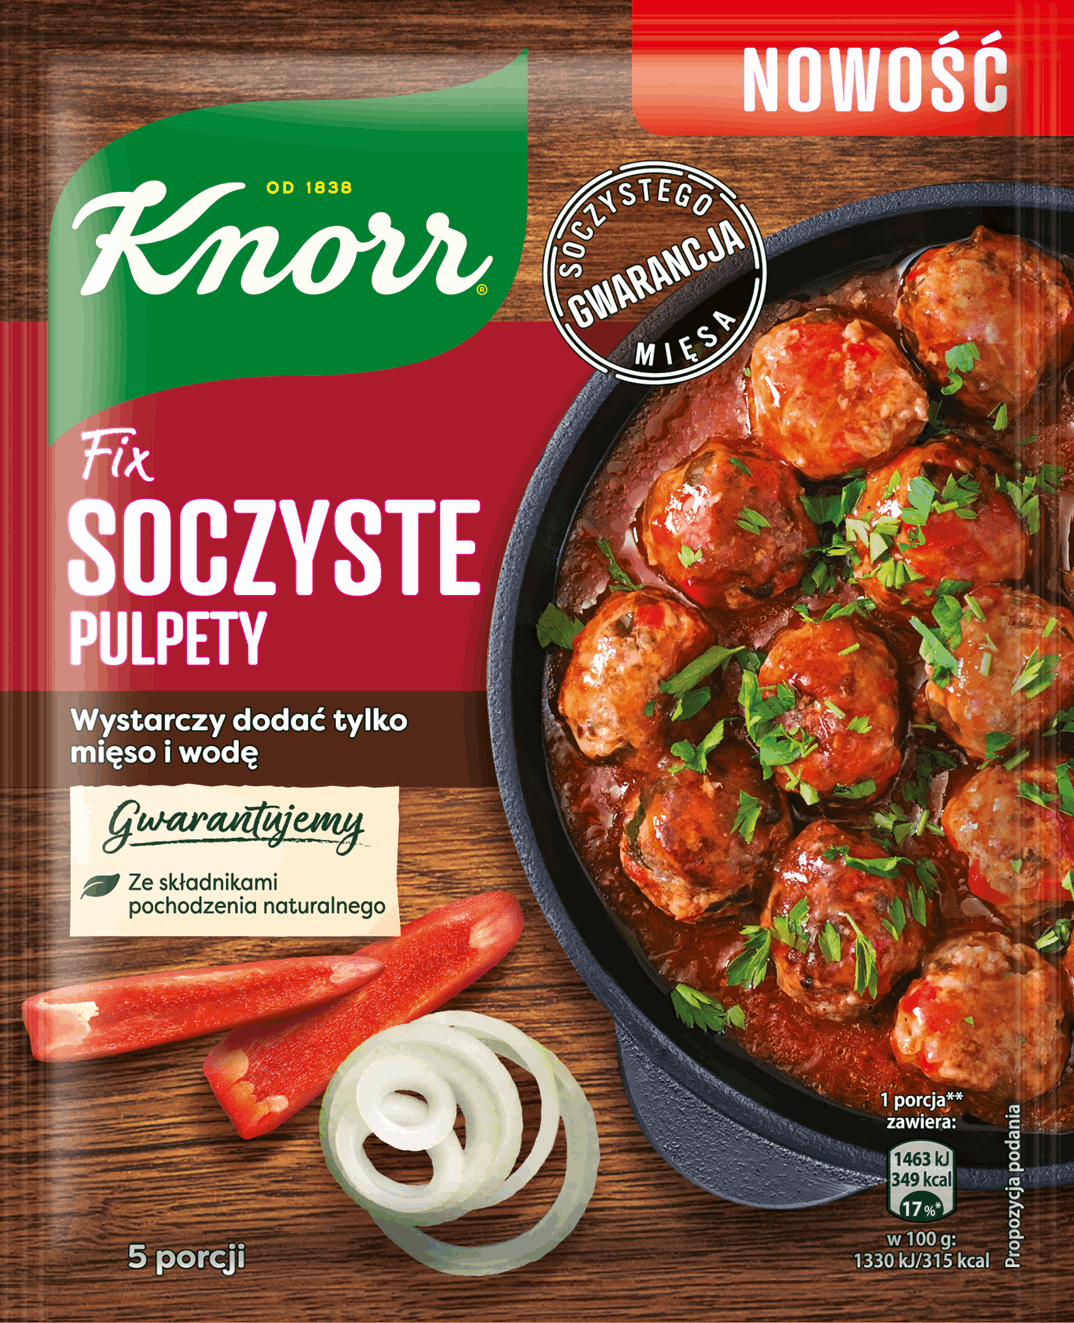 Soczyste Pulpety Knorr